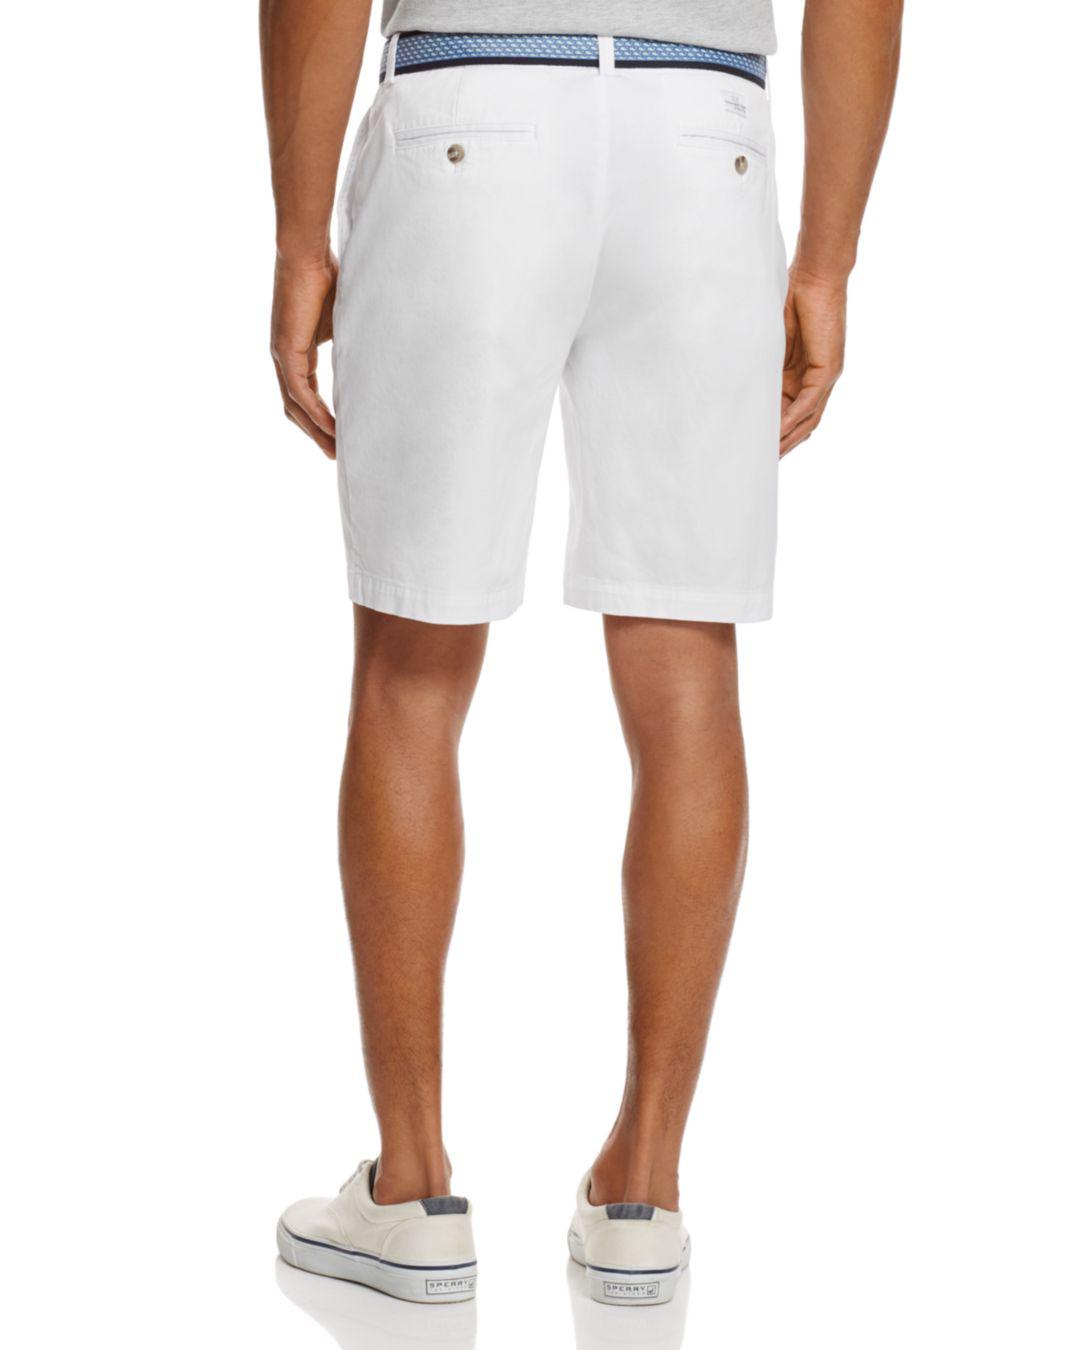 Vineyard Vines Breaker Stretch Cotton Shorts in White for Men - Lyst